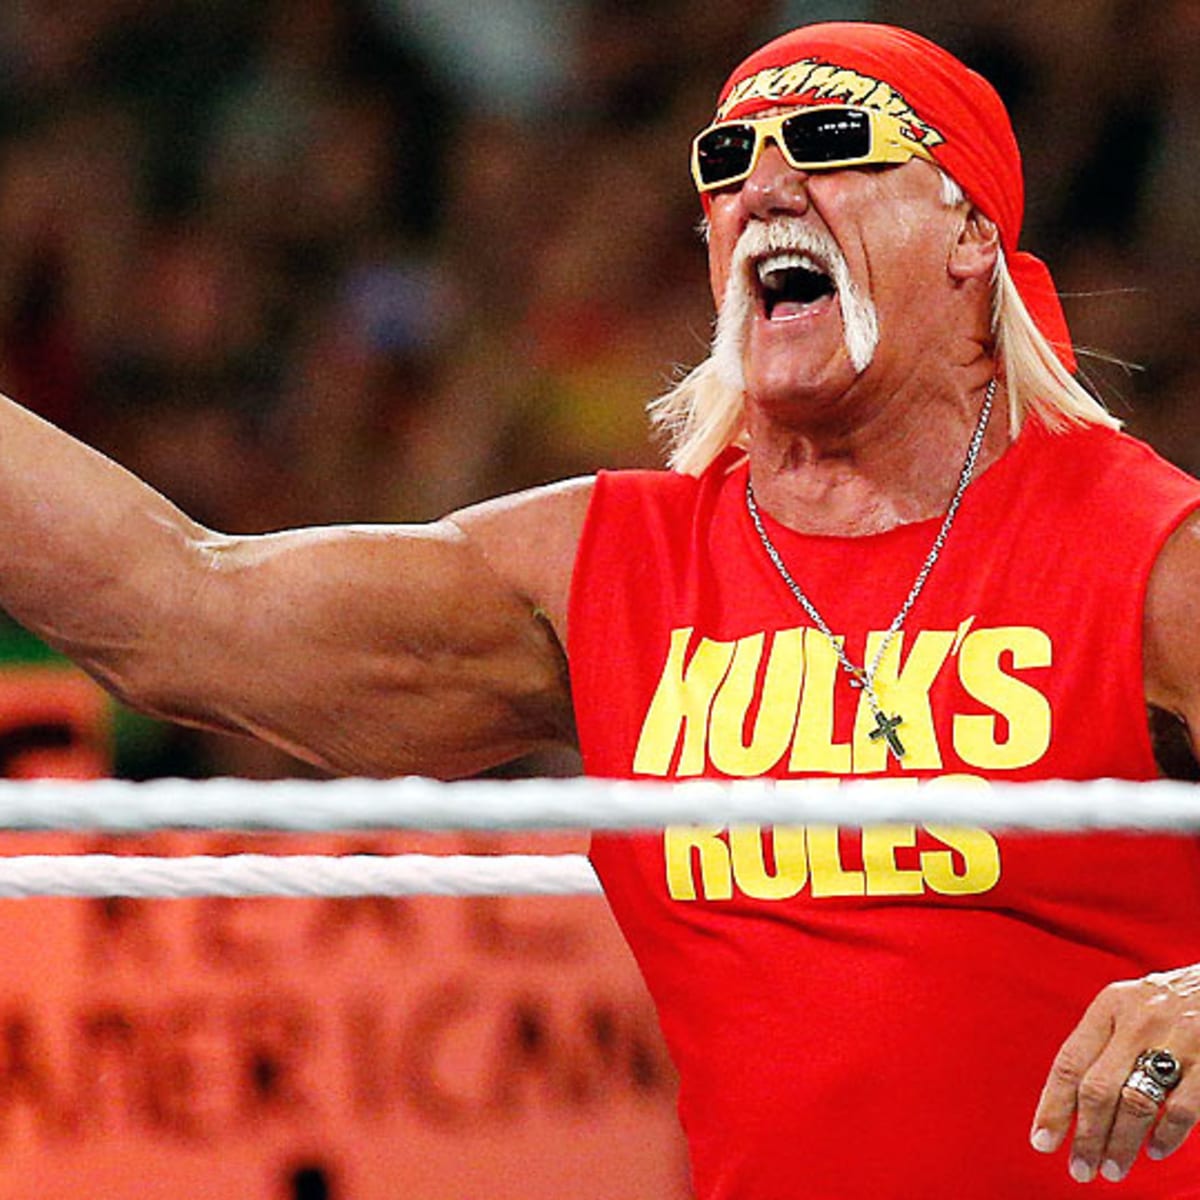 Hulk Hogan sex tape Can he win $100M lawsuit vs Gawker? pic